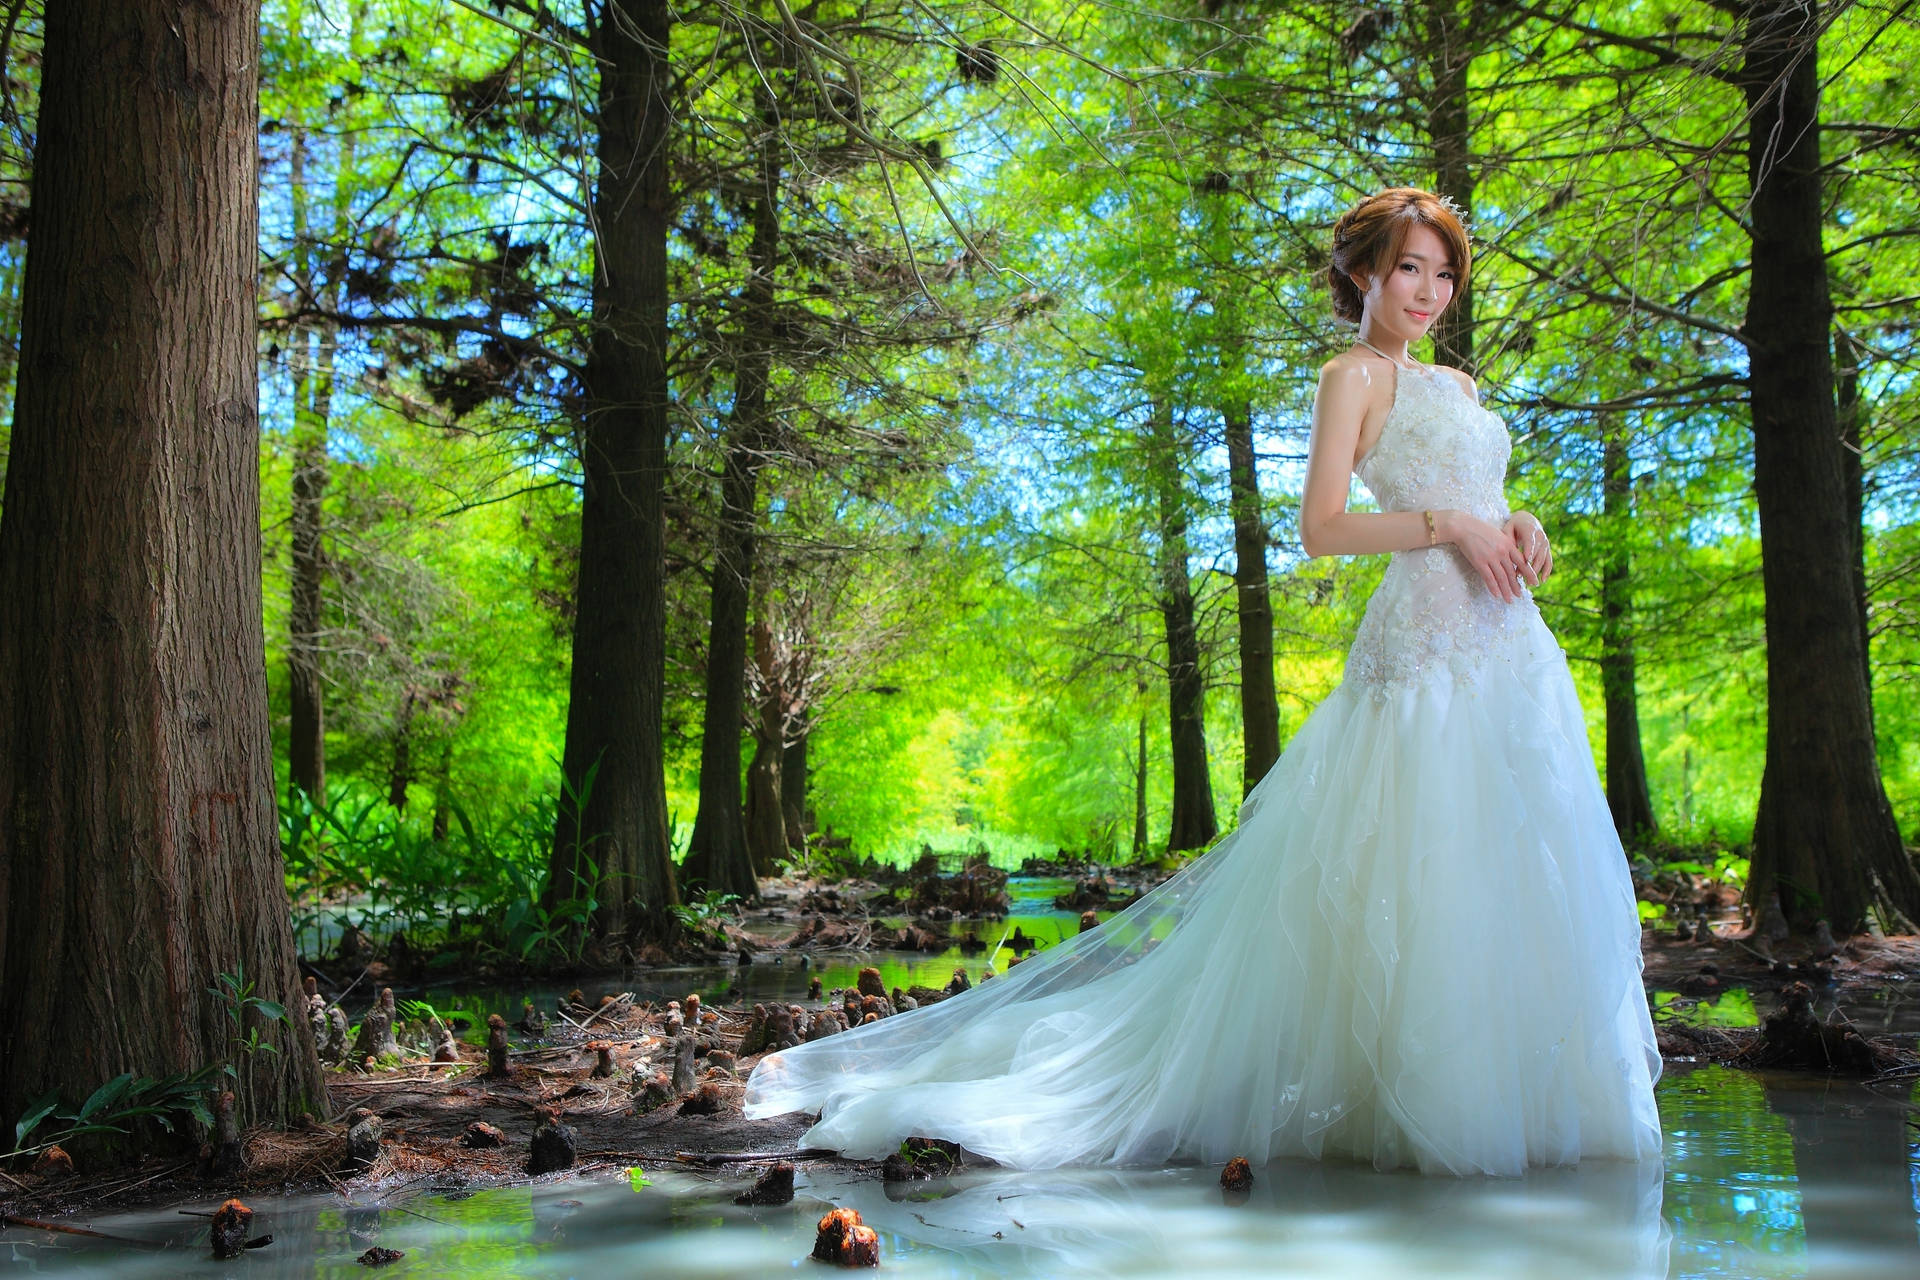 Caption: Elegant Bride In A Beautiful Wedding Gown